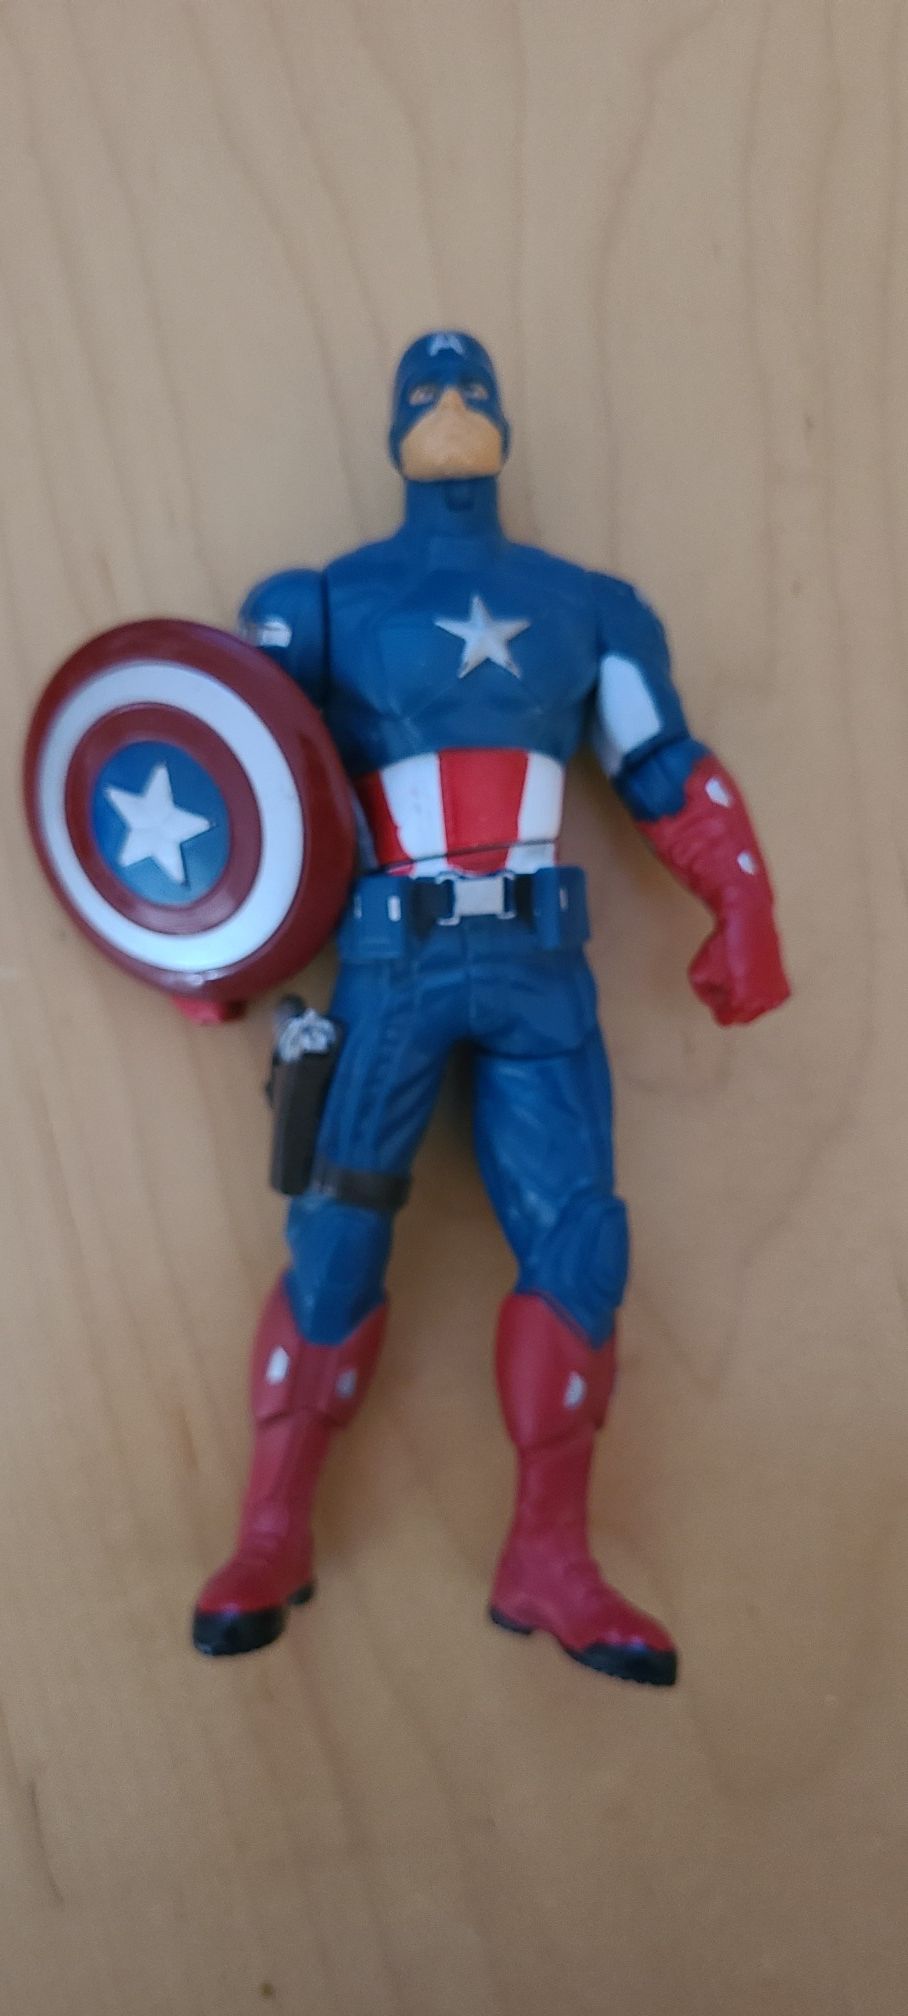 Captain America action figures